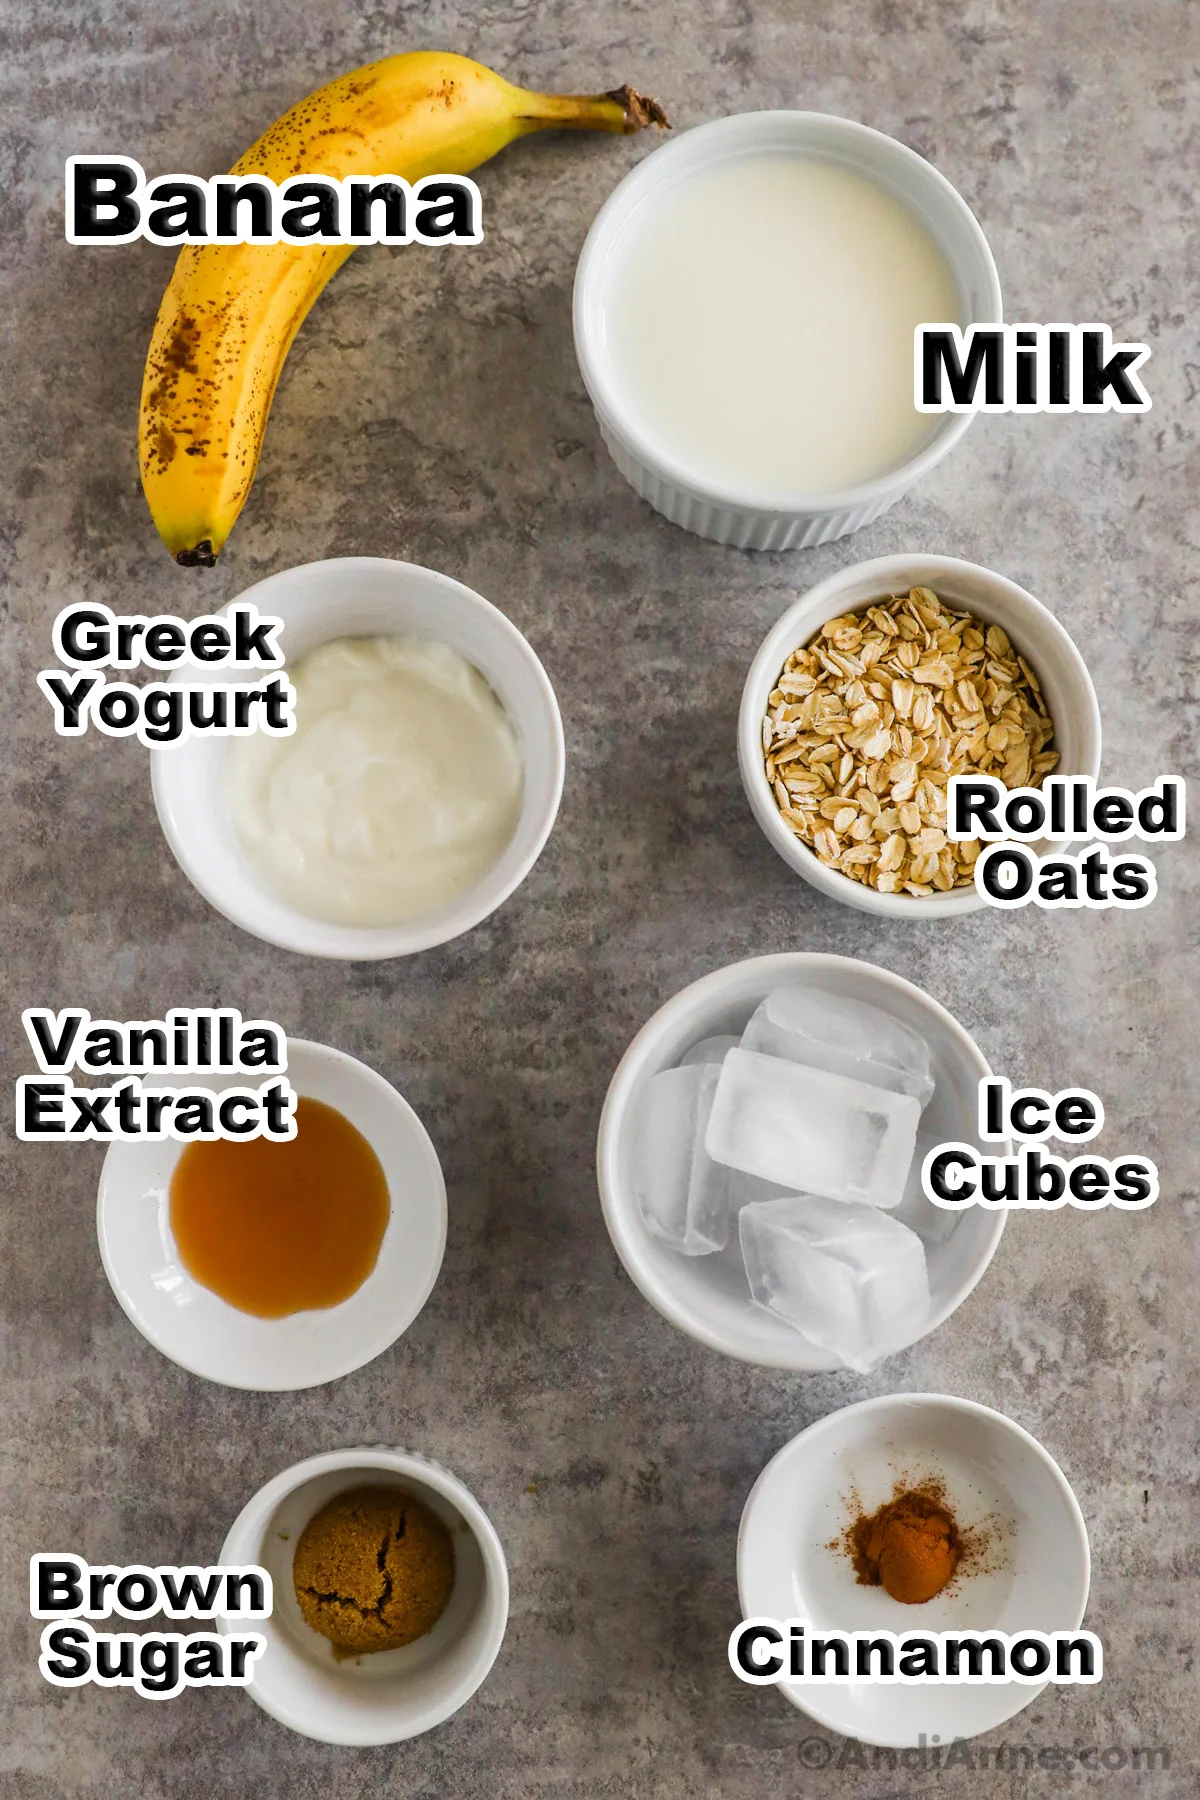 Bowls of milk, yogurt, oats, ice cubes, vanilla extract, brown sugar and cinnamon. Also a banana.